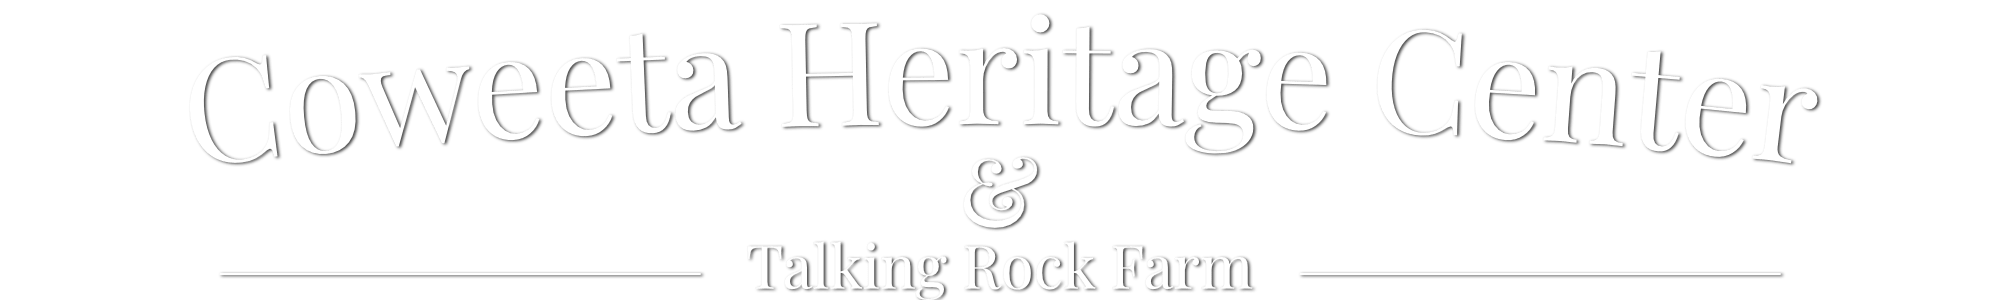 Coweeta Heritage Center logo